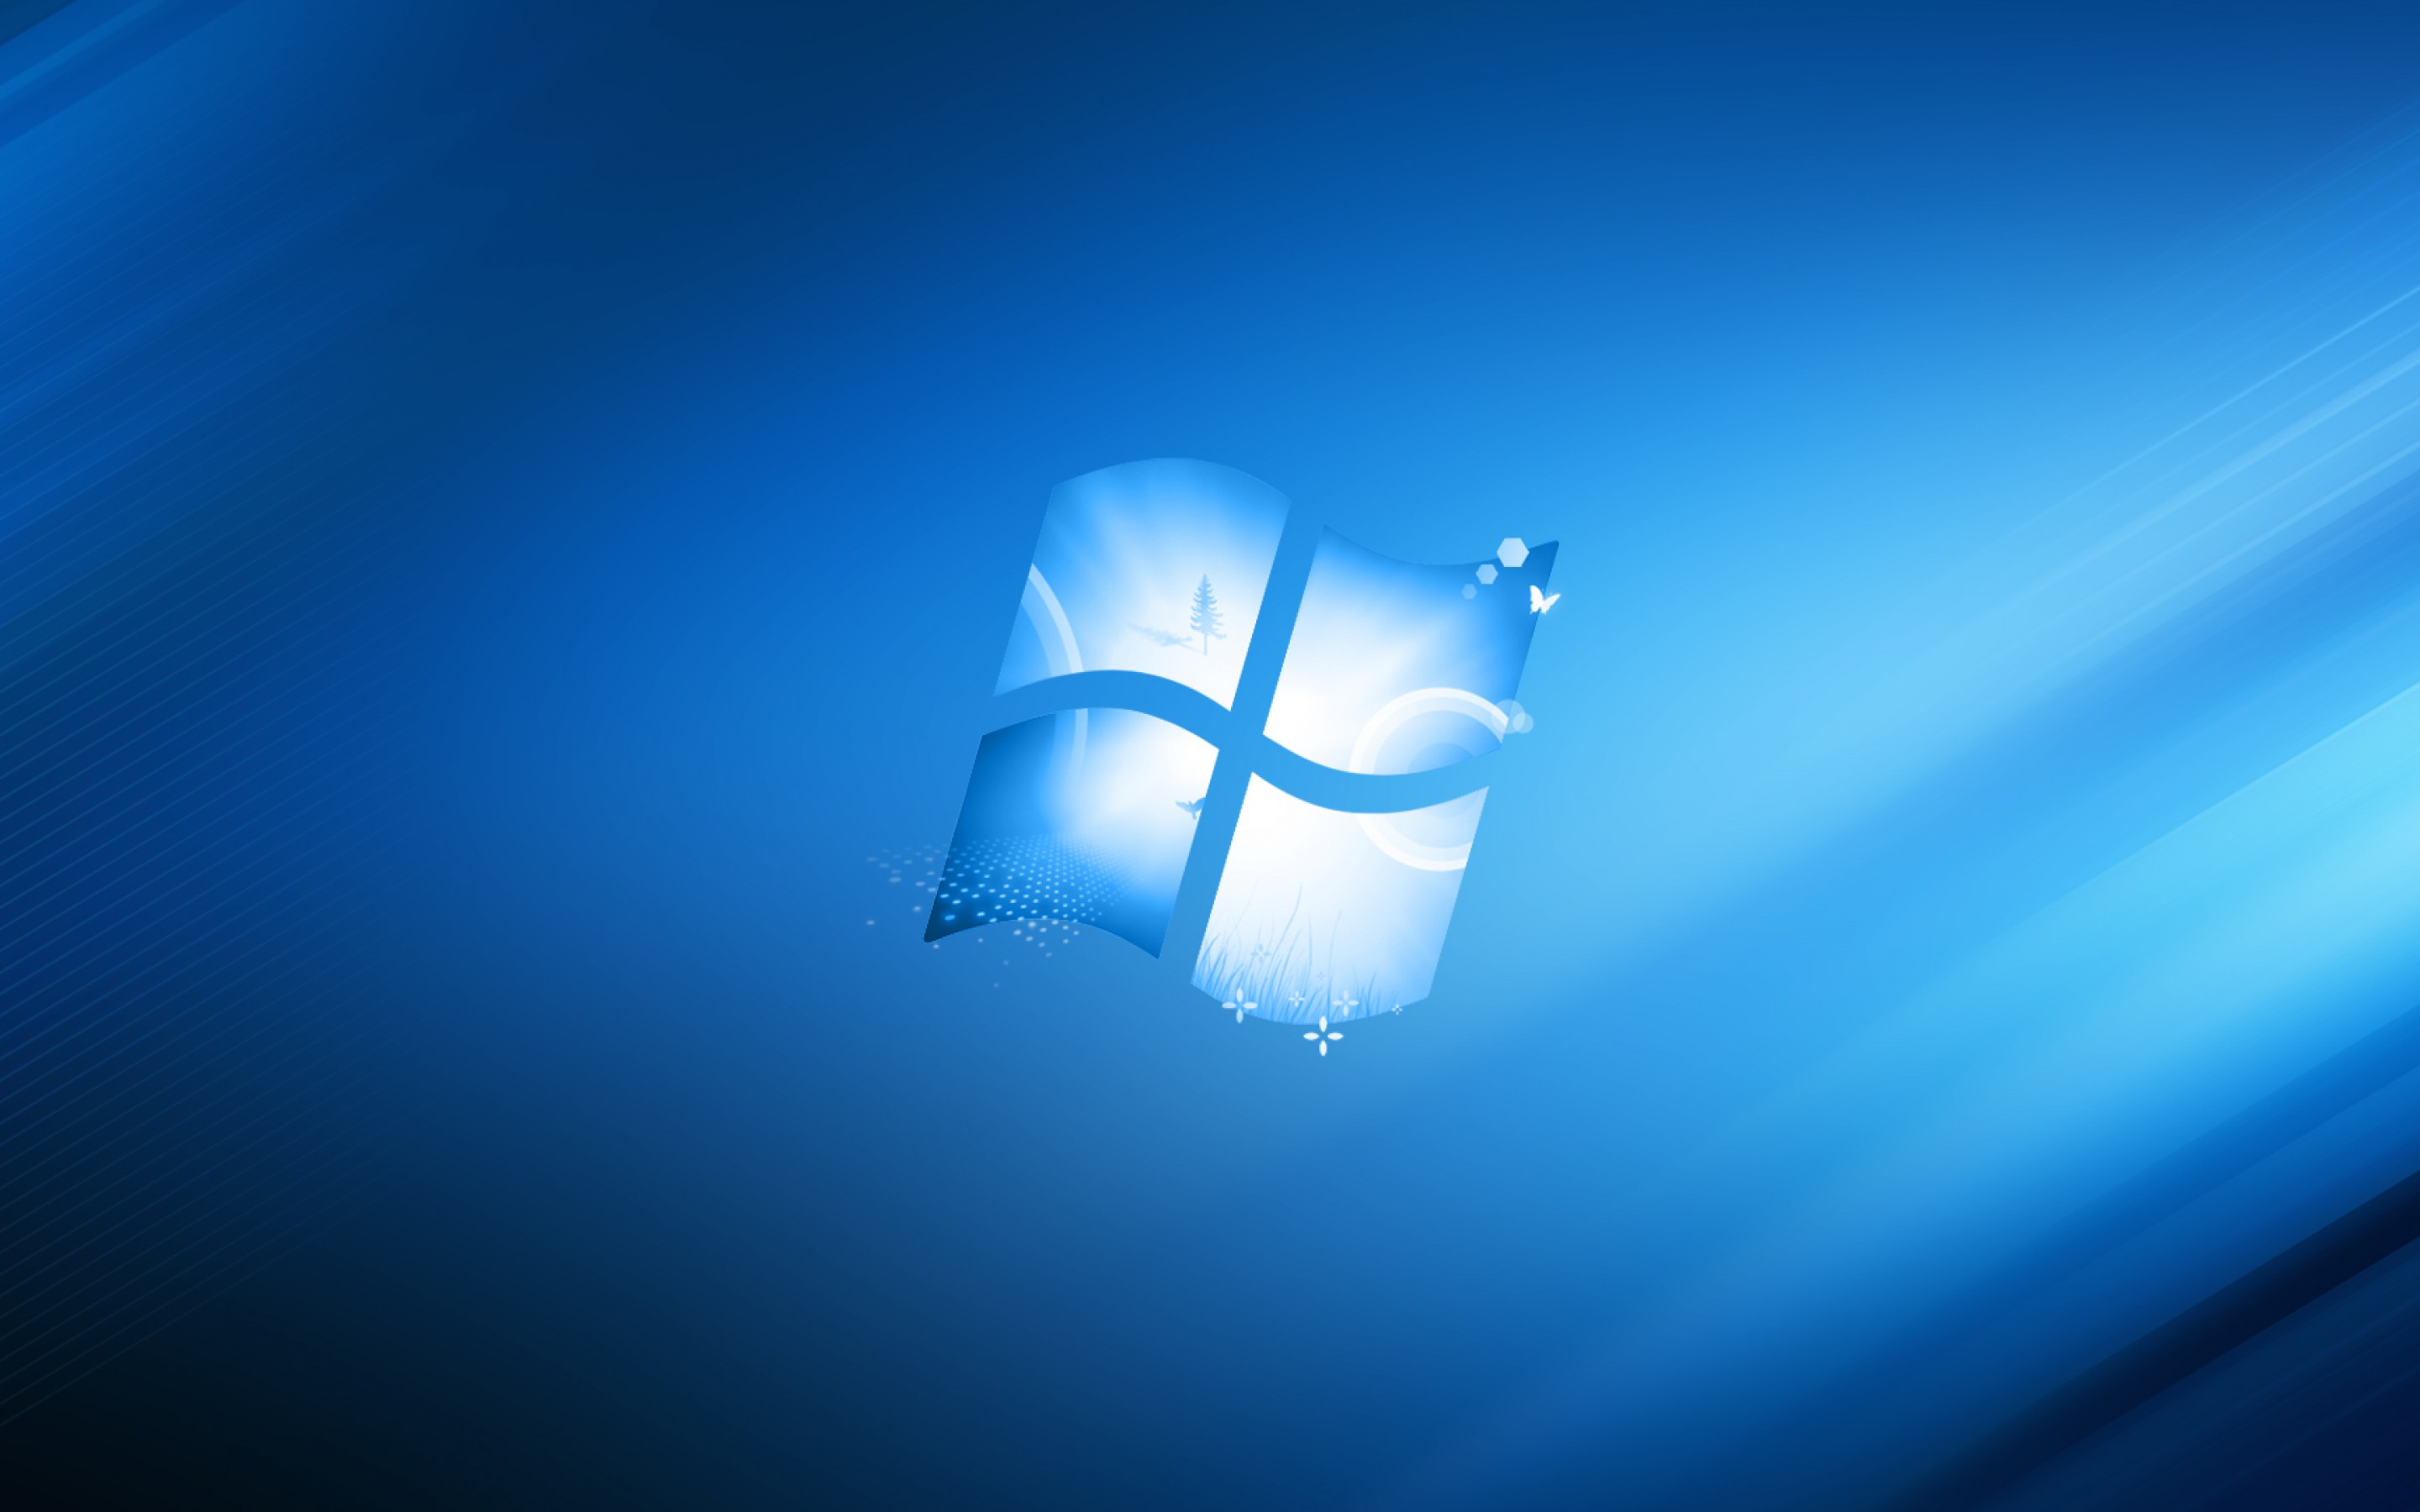 Windows 10 Save as Wallpaper - WallpaperSafari